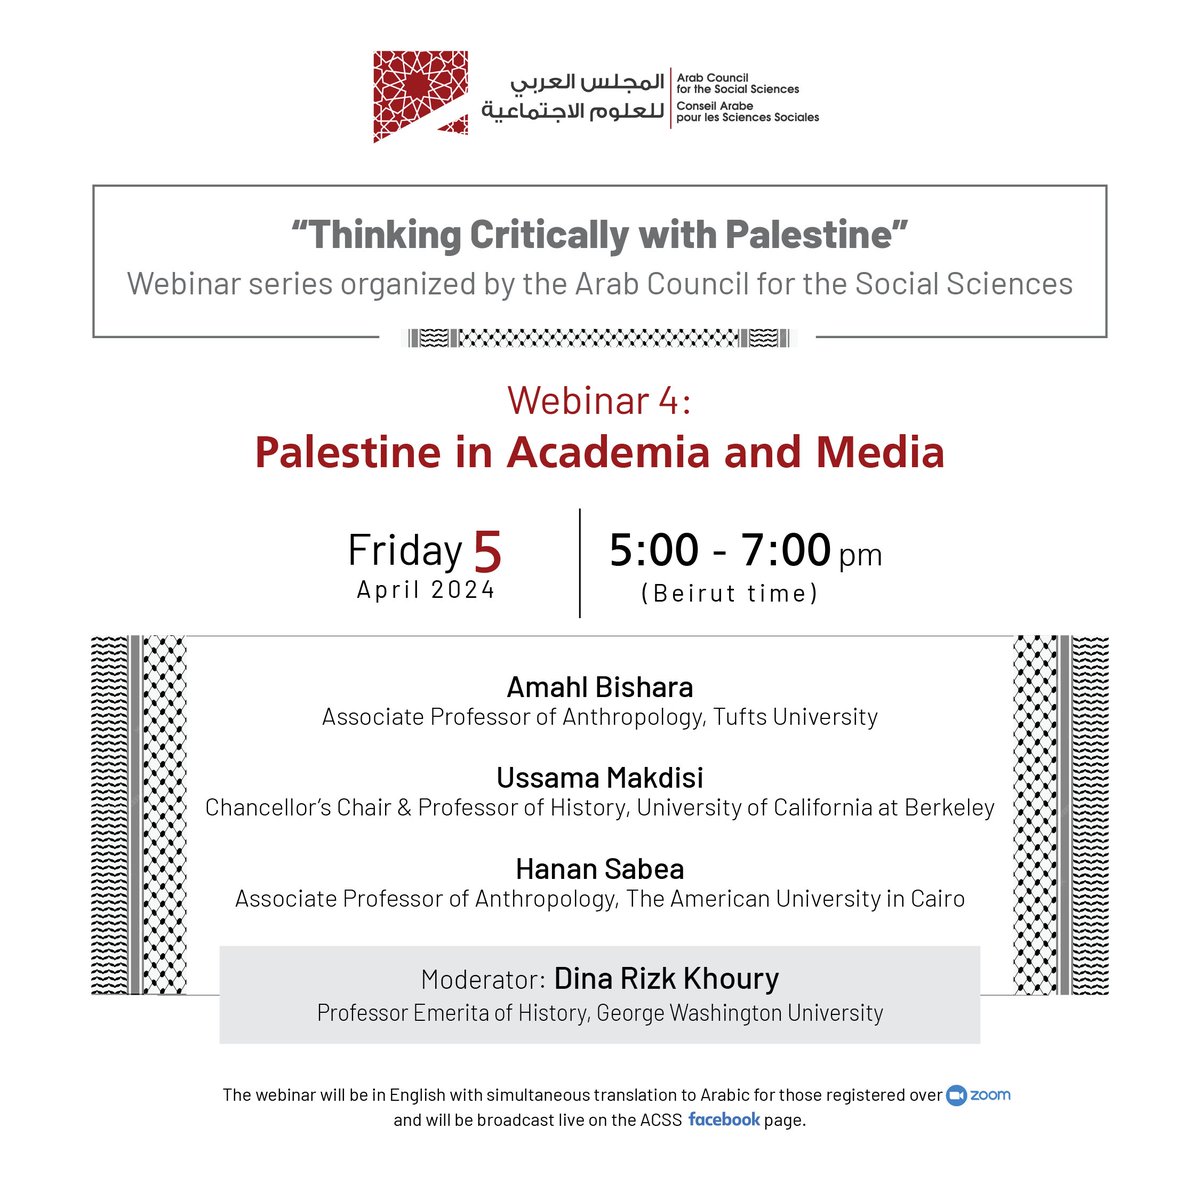 Webinar 4: Palestine in Academia and Media Date: Friday, April 5, 2024 Time: 5:00-7:00pm (Beirut time) To register: us02web.zoom.us/webinar/regist…